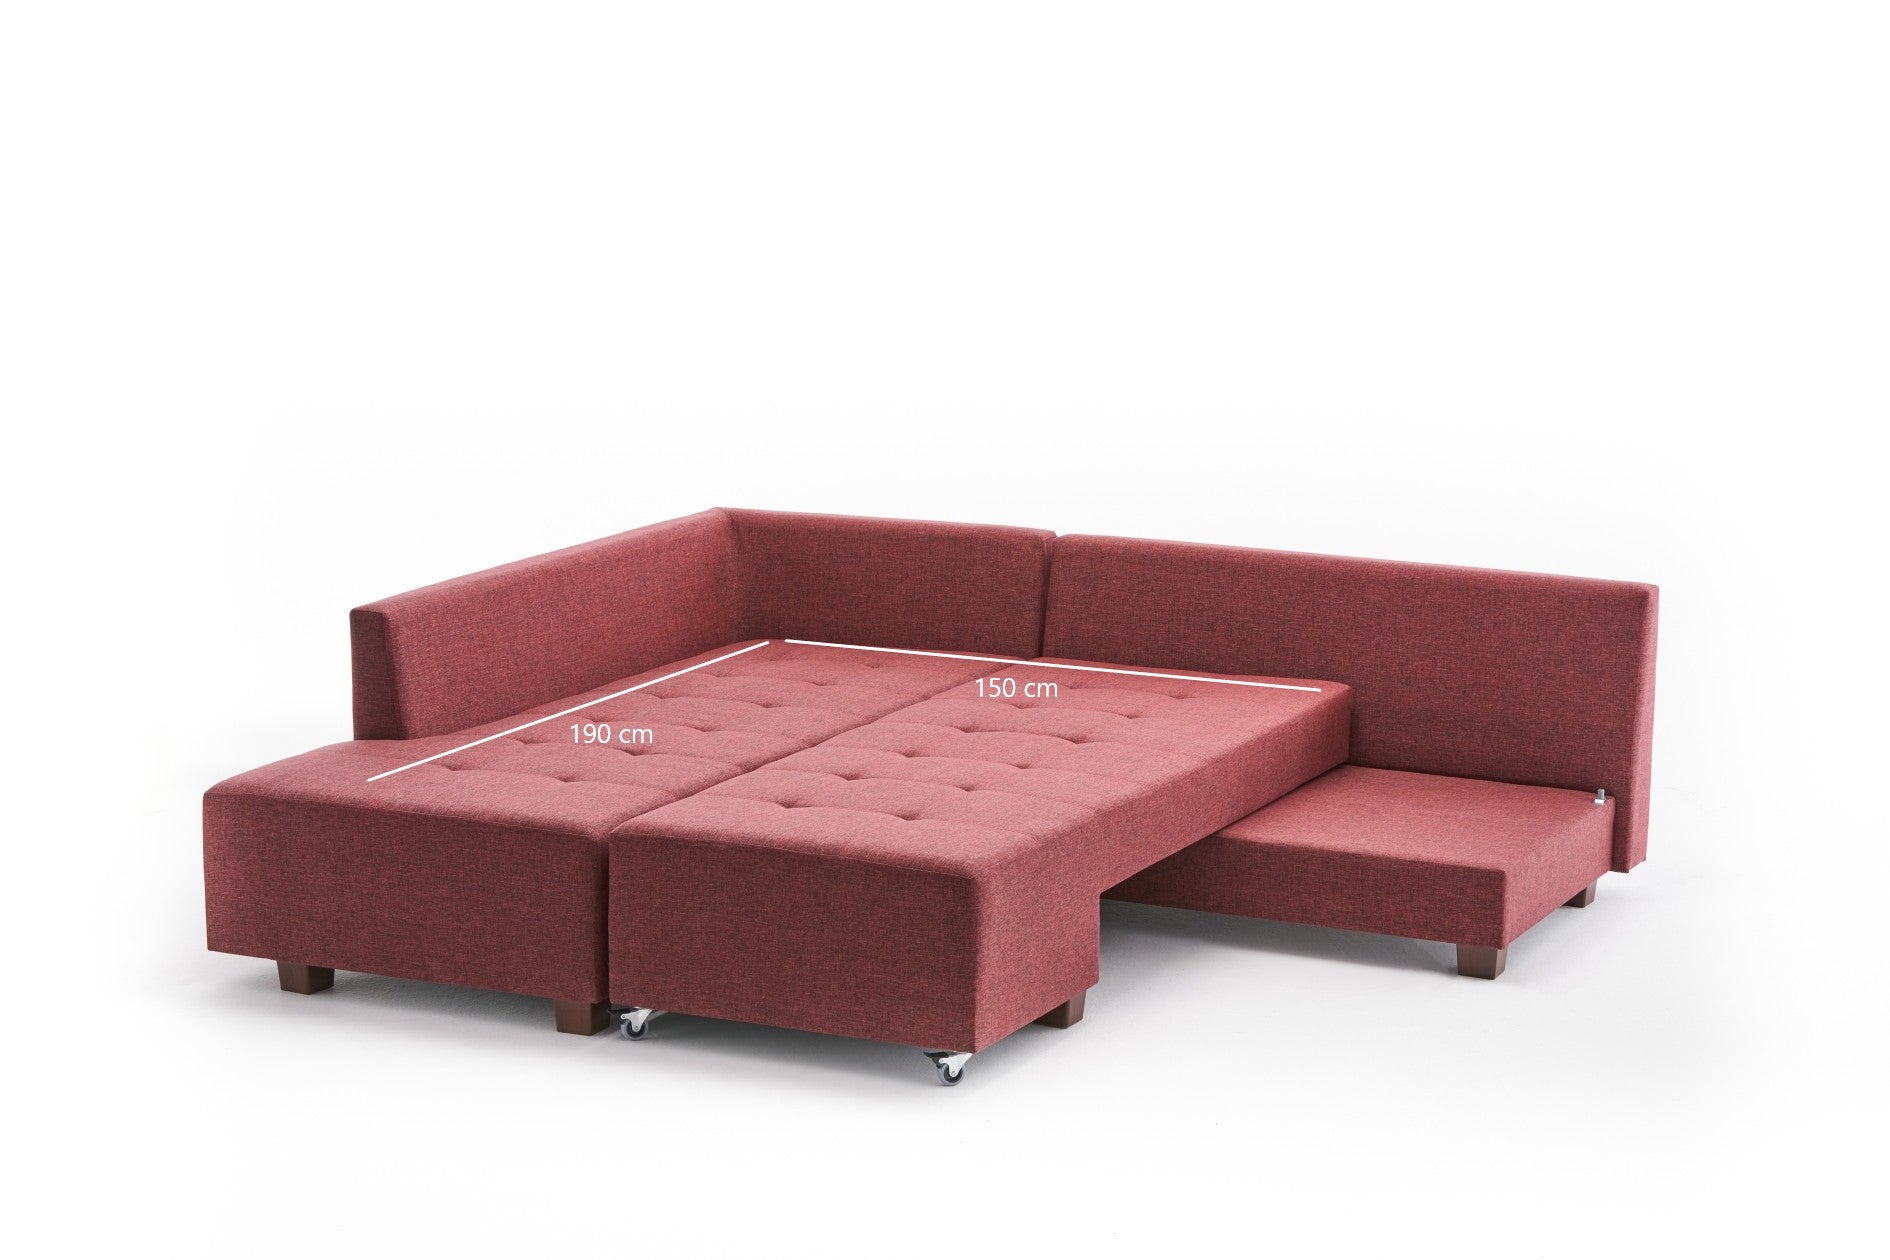 TAKK Manama Corner Sofa Bed Left - Claret Red - NordlyHome.dk